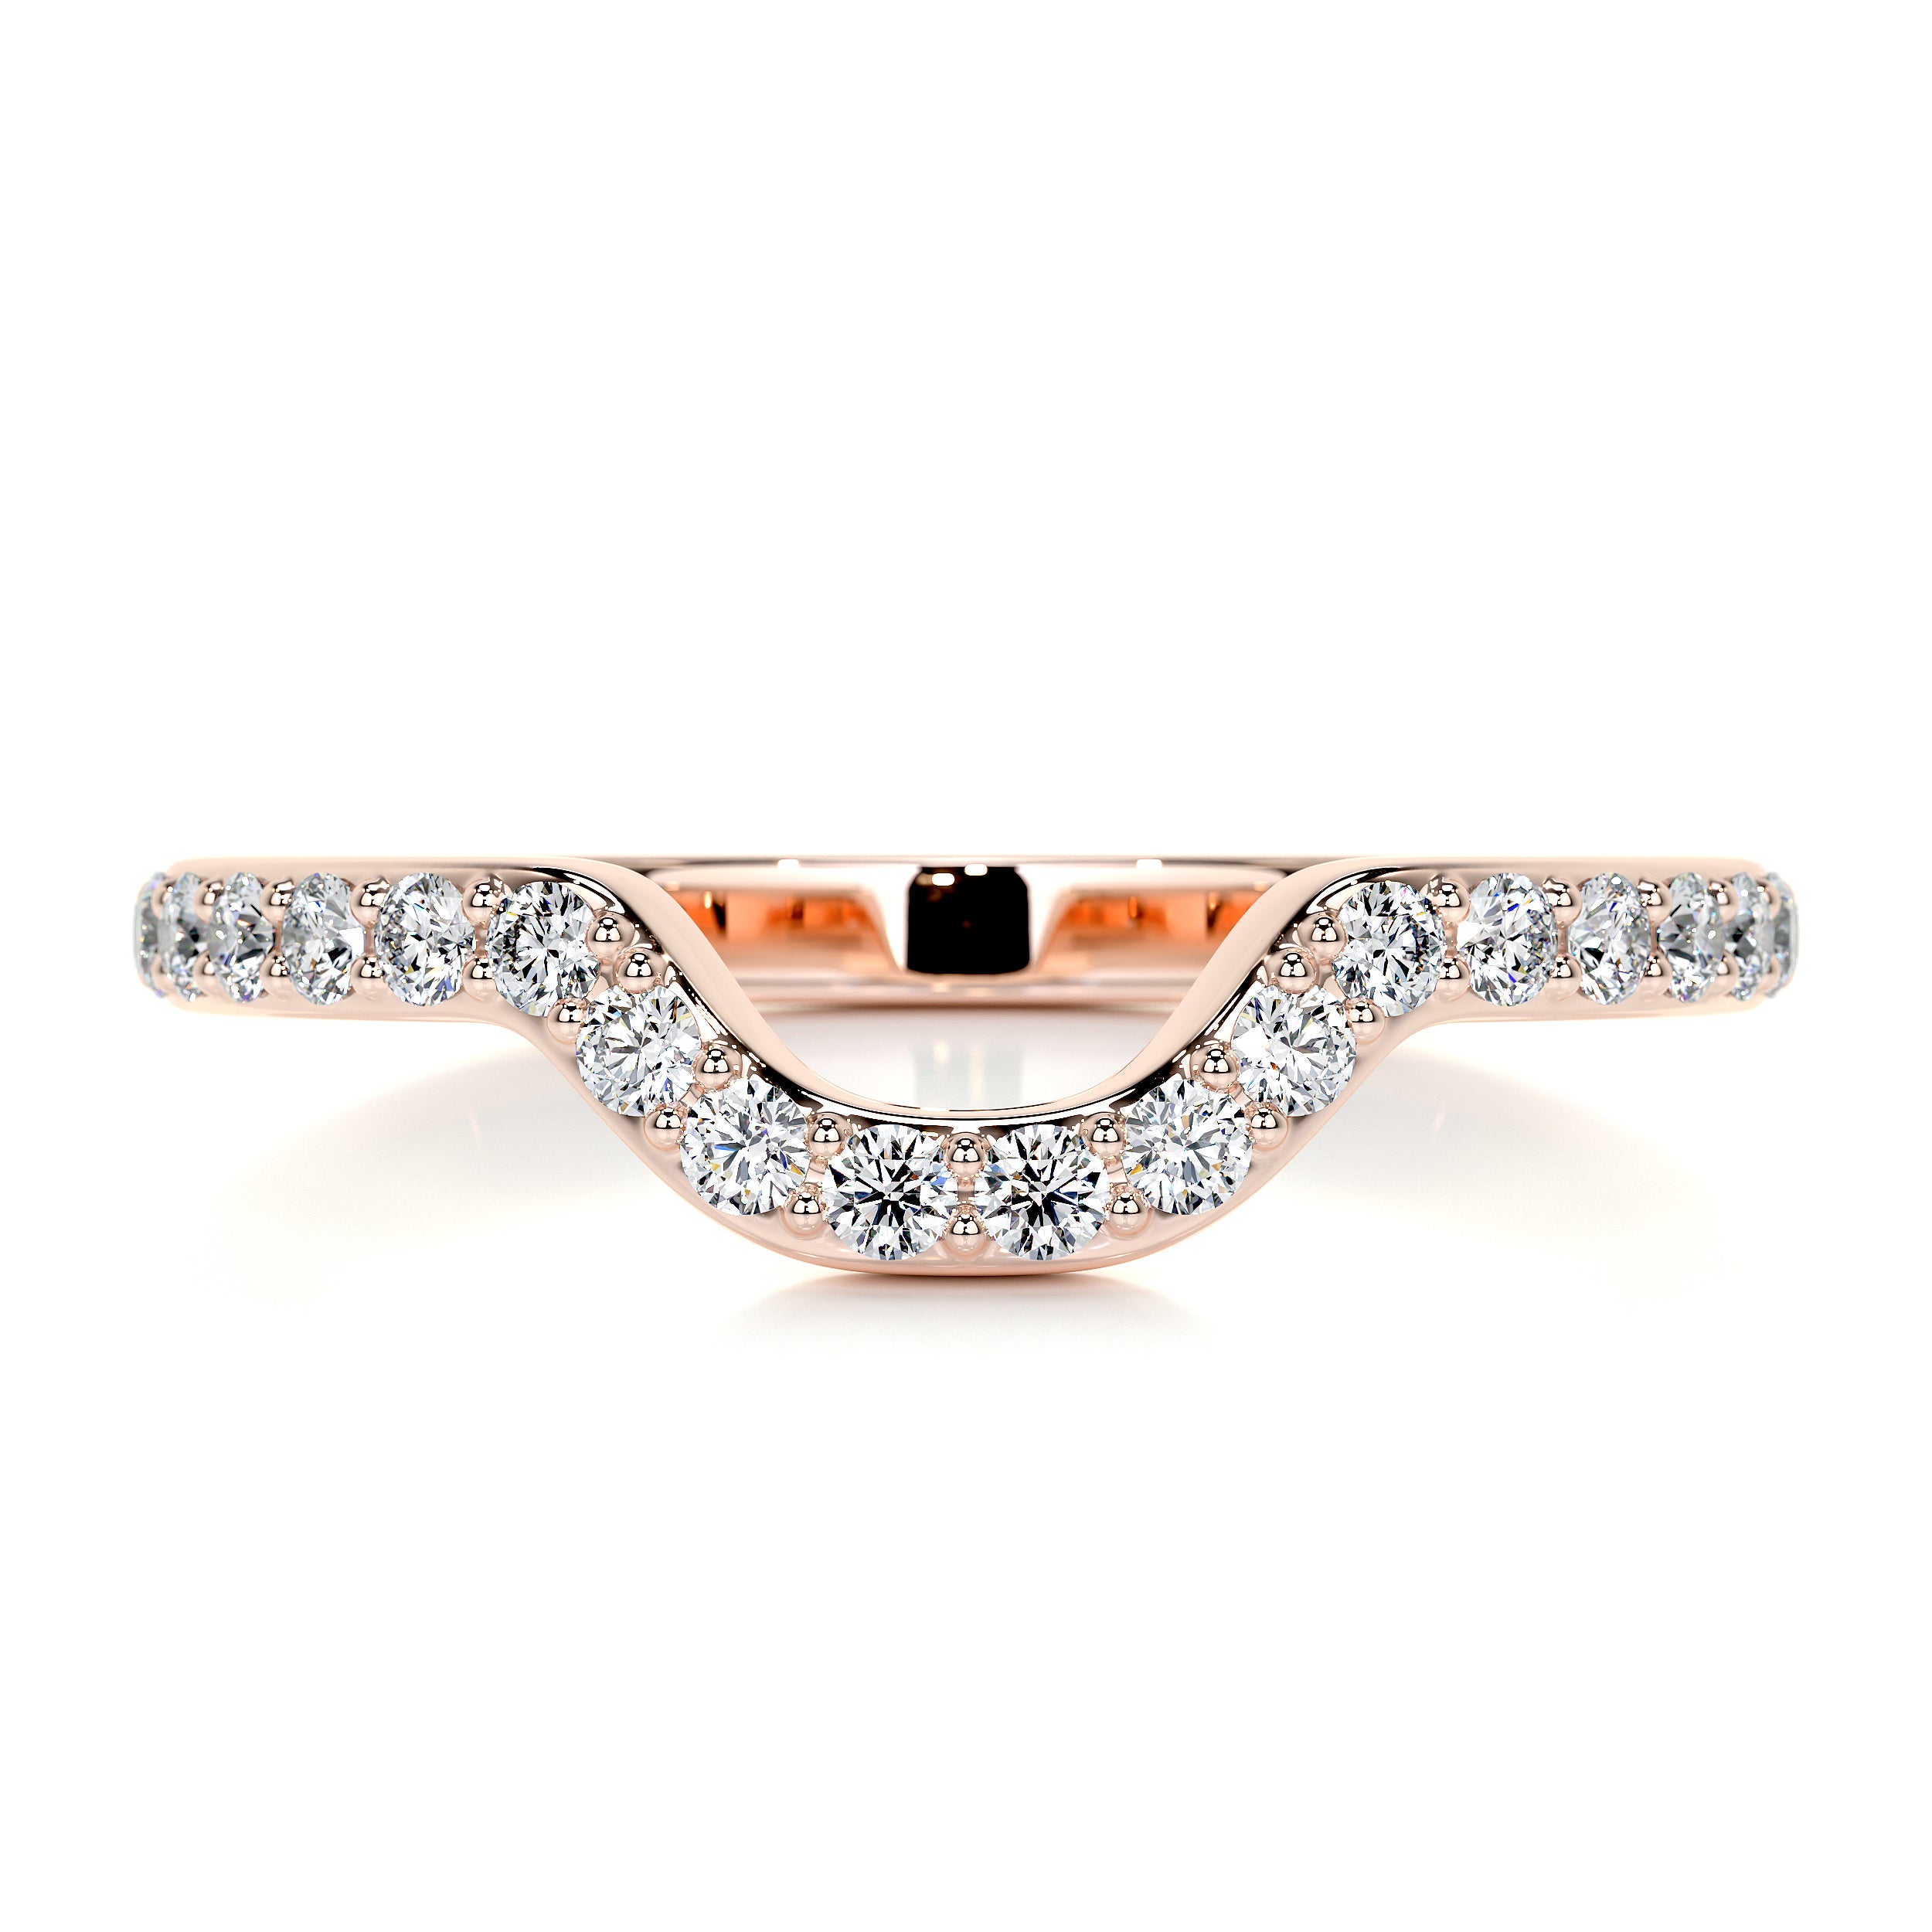 Nina Diamond Wedding Ring   (0.2 Carat) -14K Rose Gold